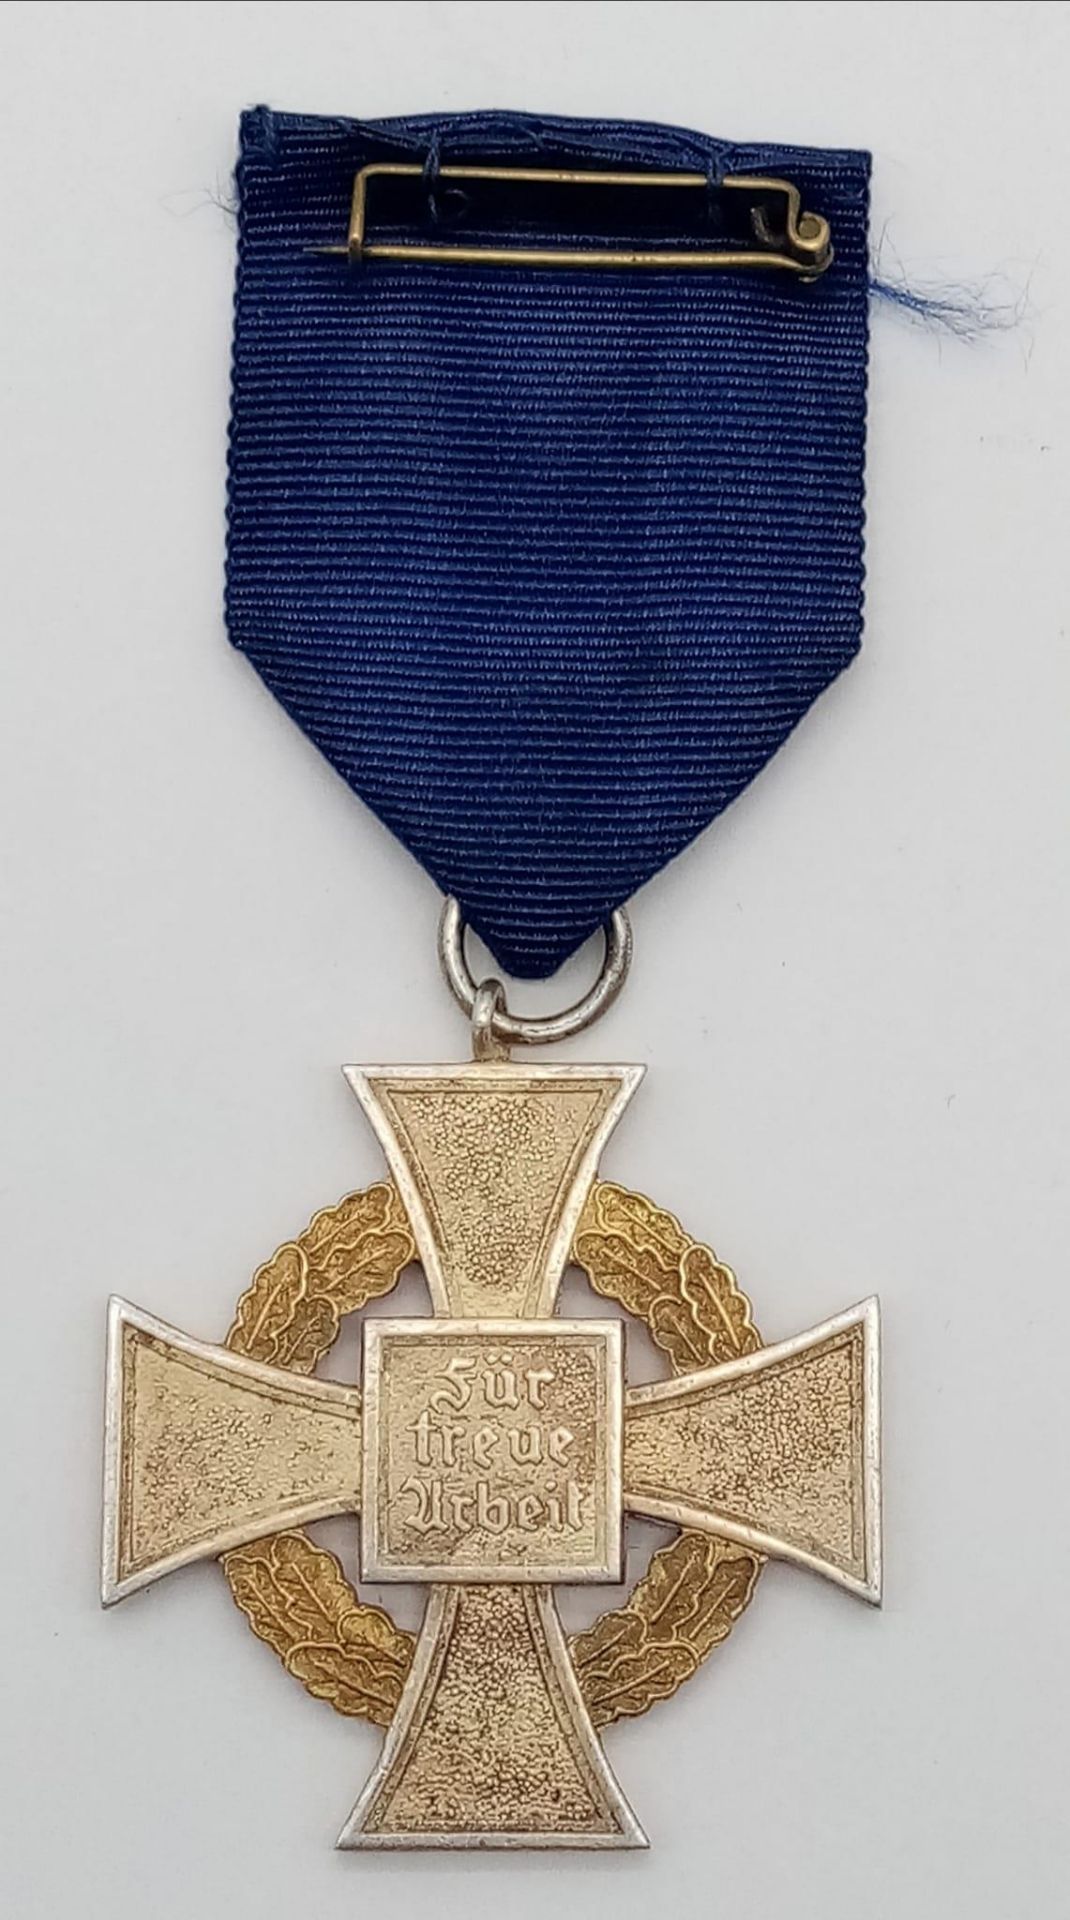 3rd Reich Civil Service 50 Year Medal “Für treue Arbeit” (“For Faithful Work”) - Image 2 of 3